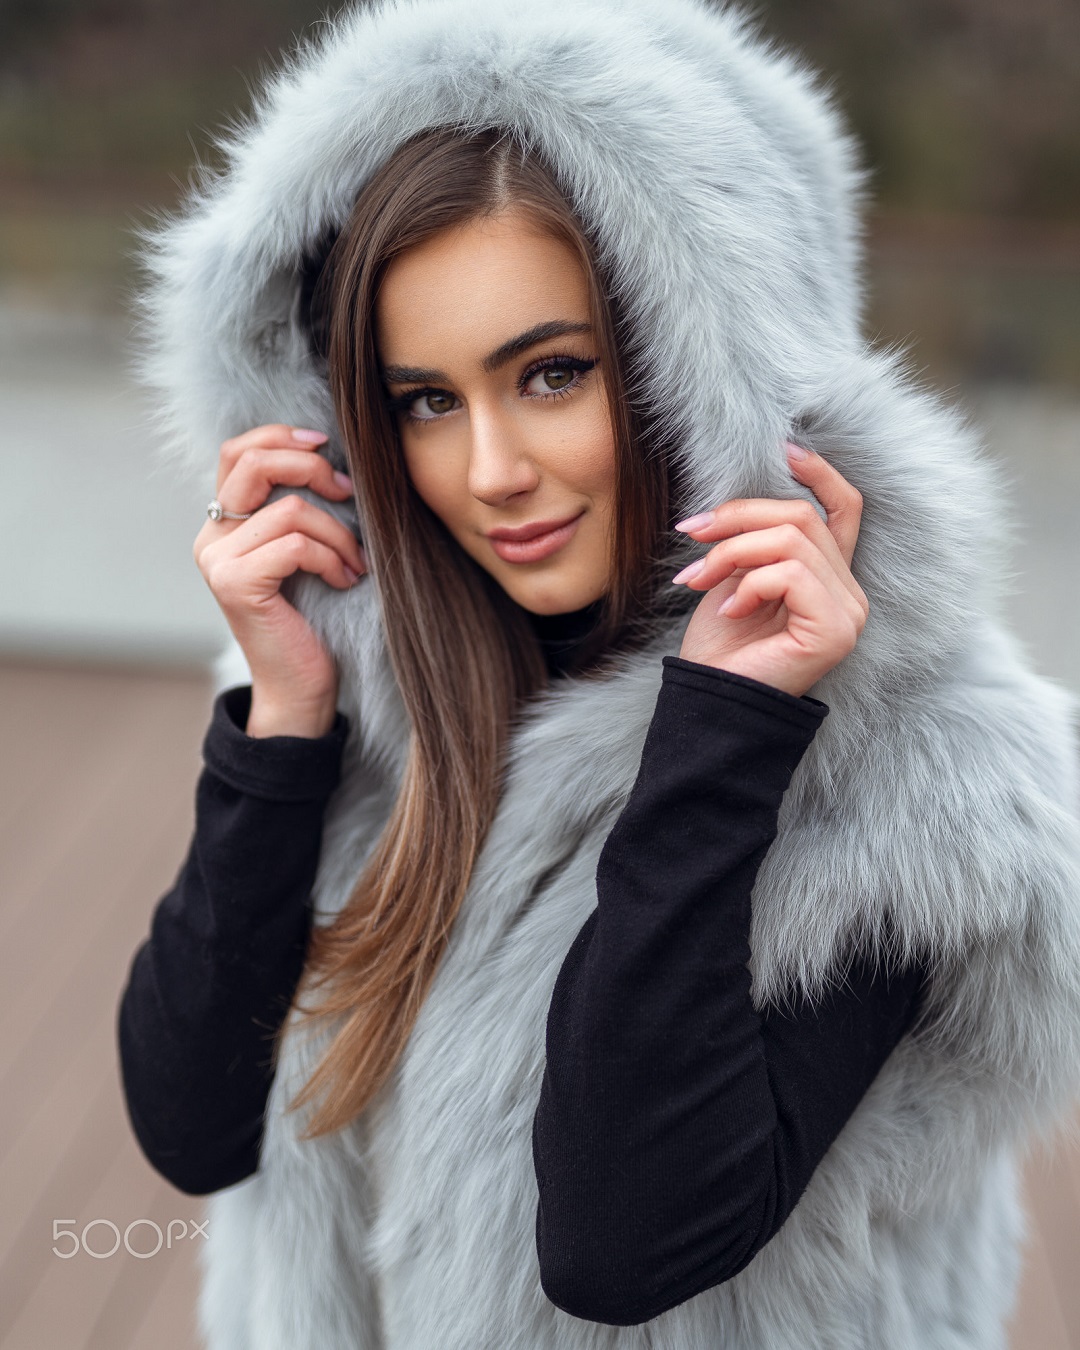 Andrei Marginean Women Model 500px Hoods Fur Smiling 1080x1350